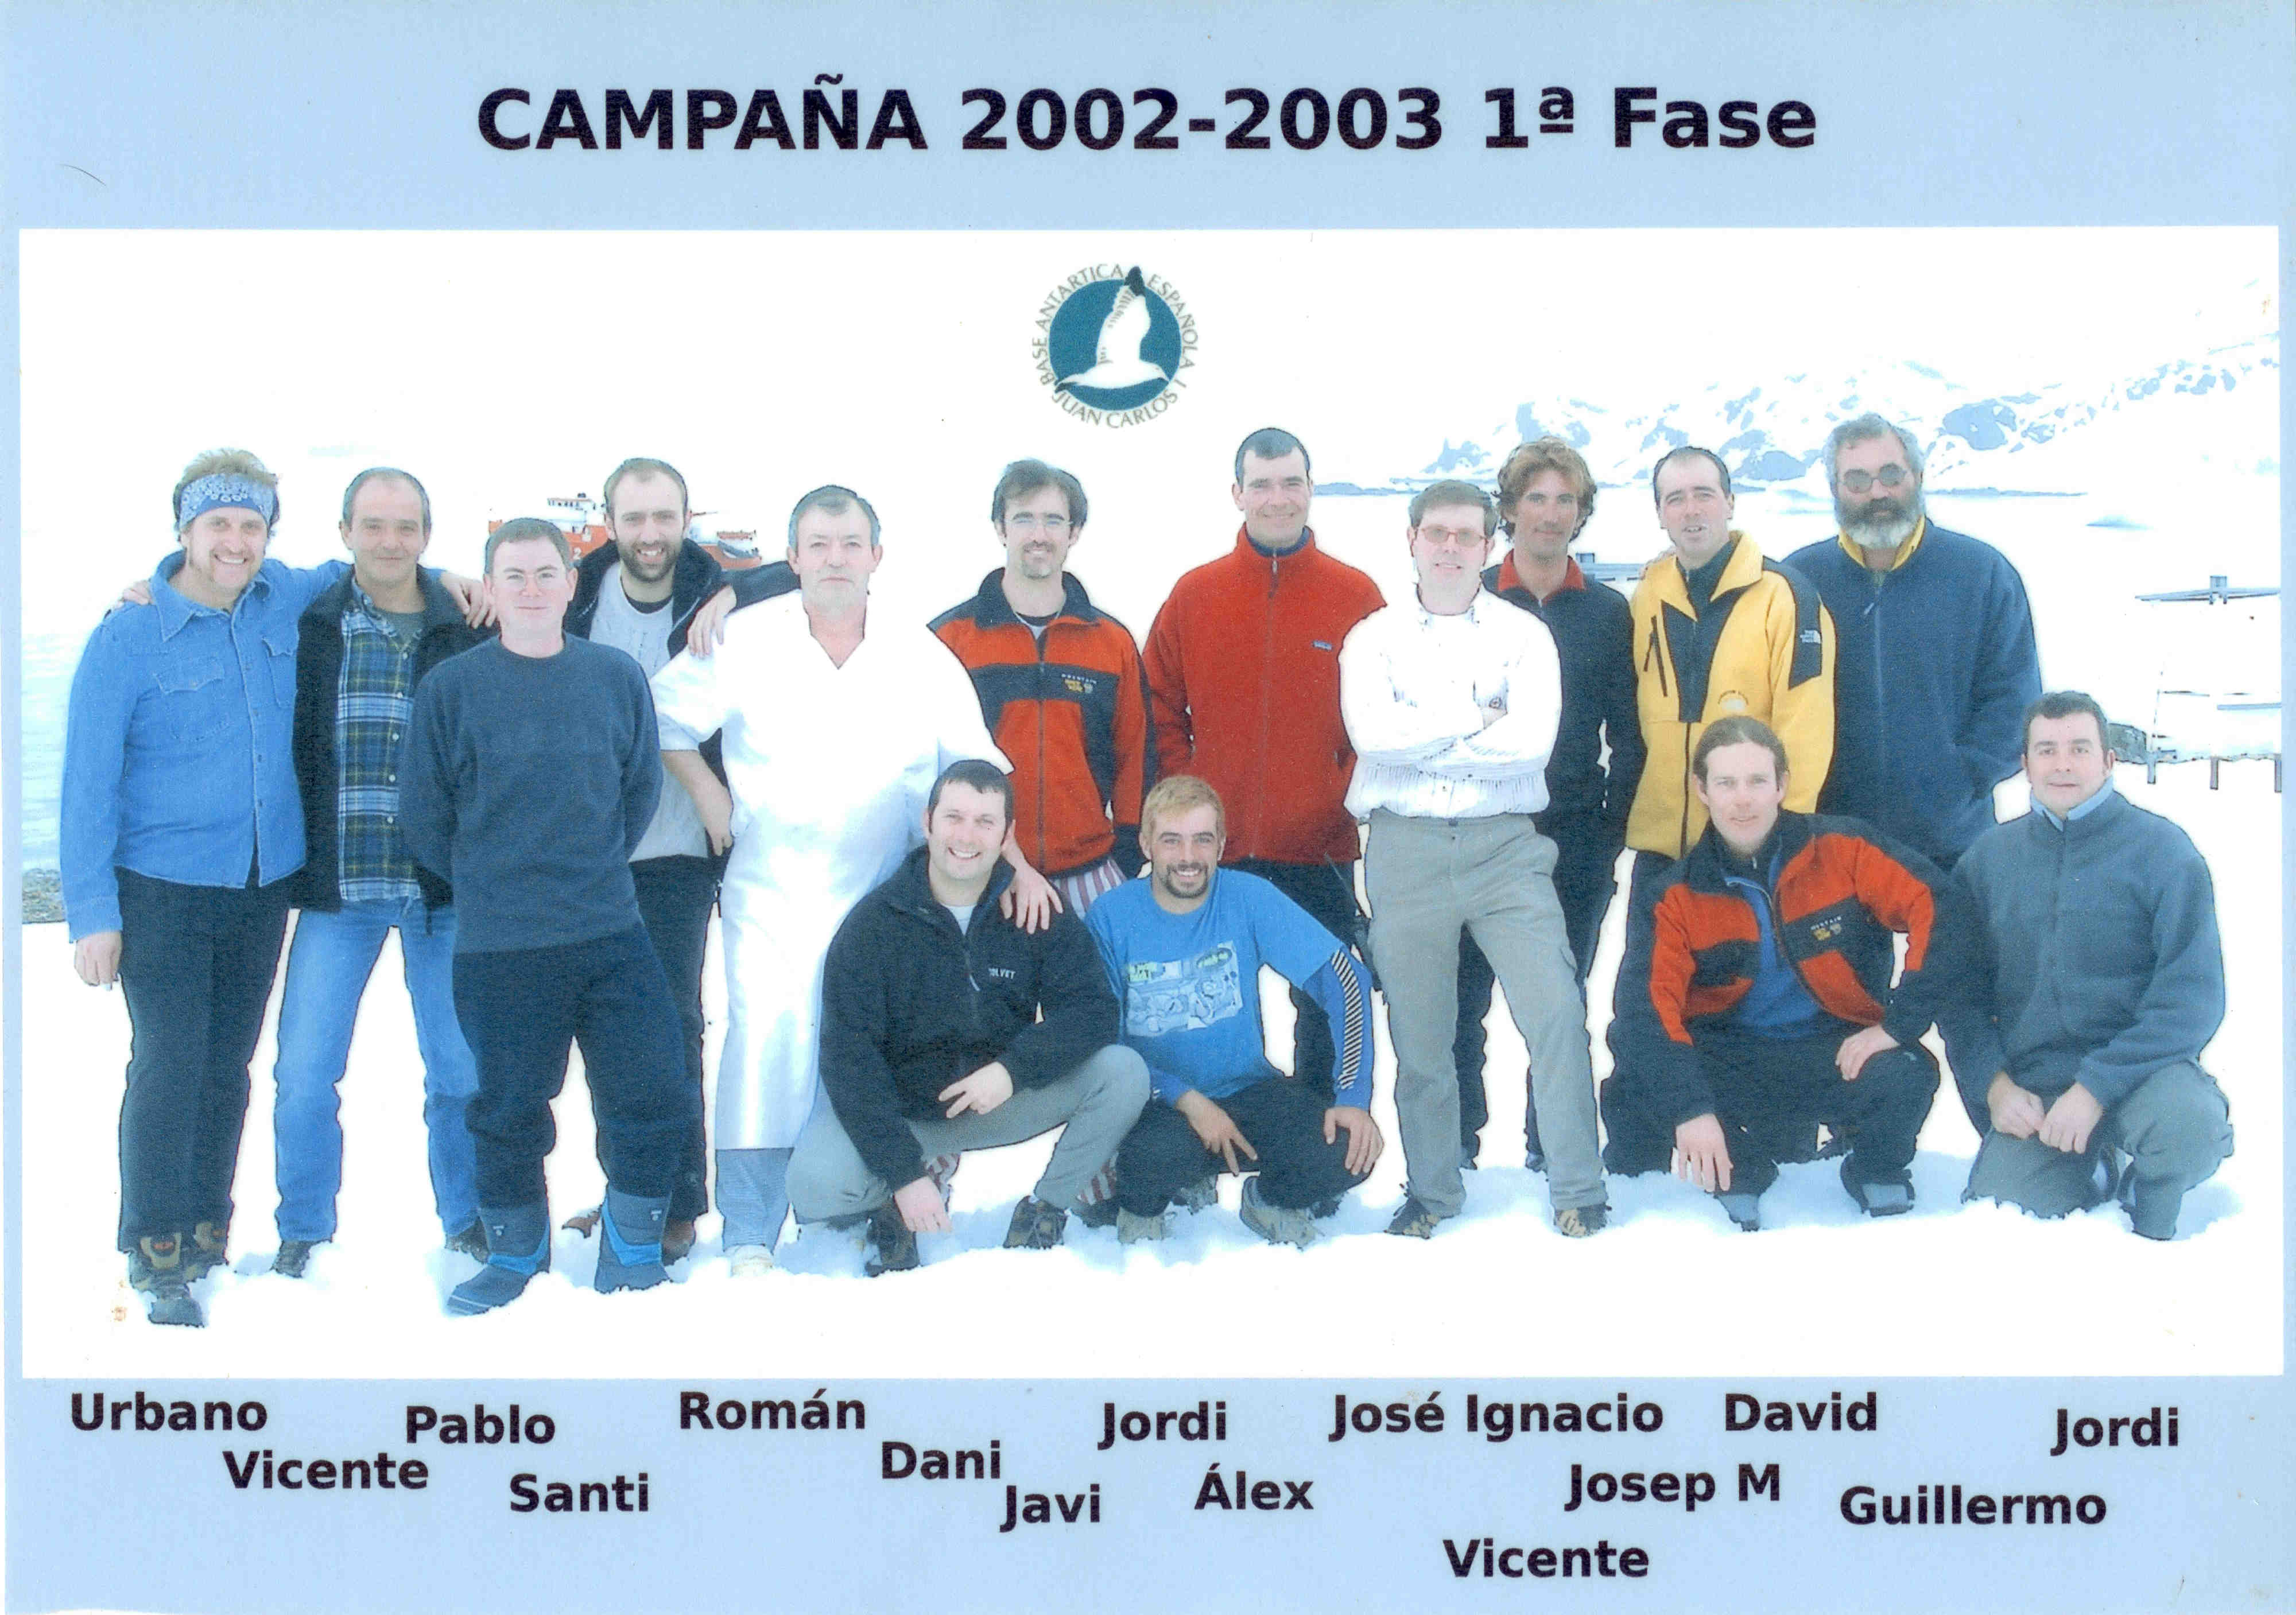 Foto Oficial 2002-2003 1ª Fase.jpg 